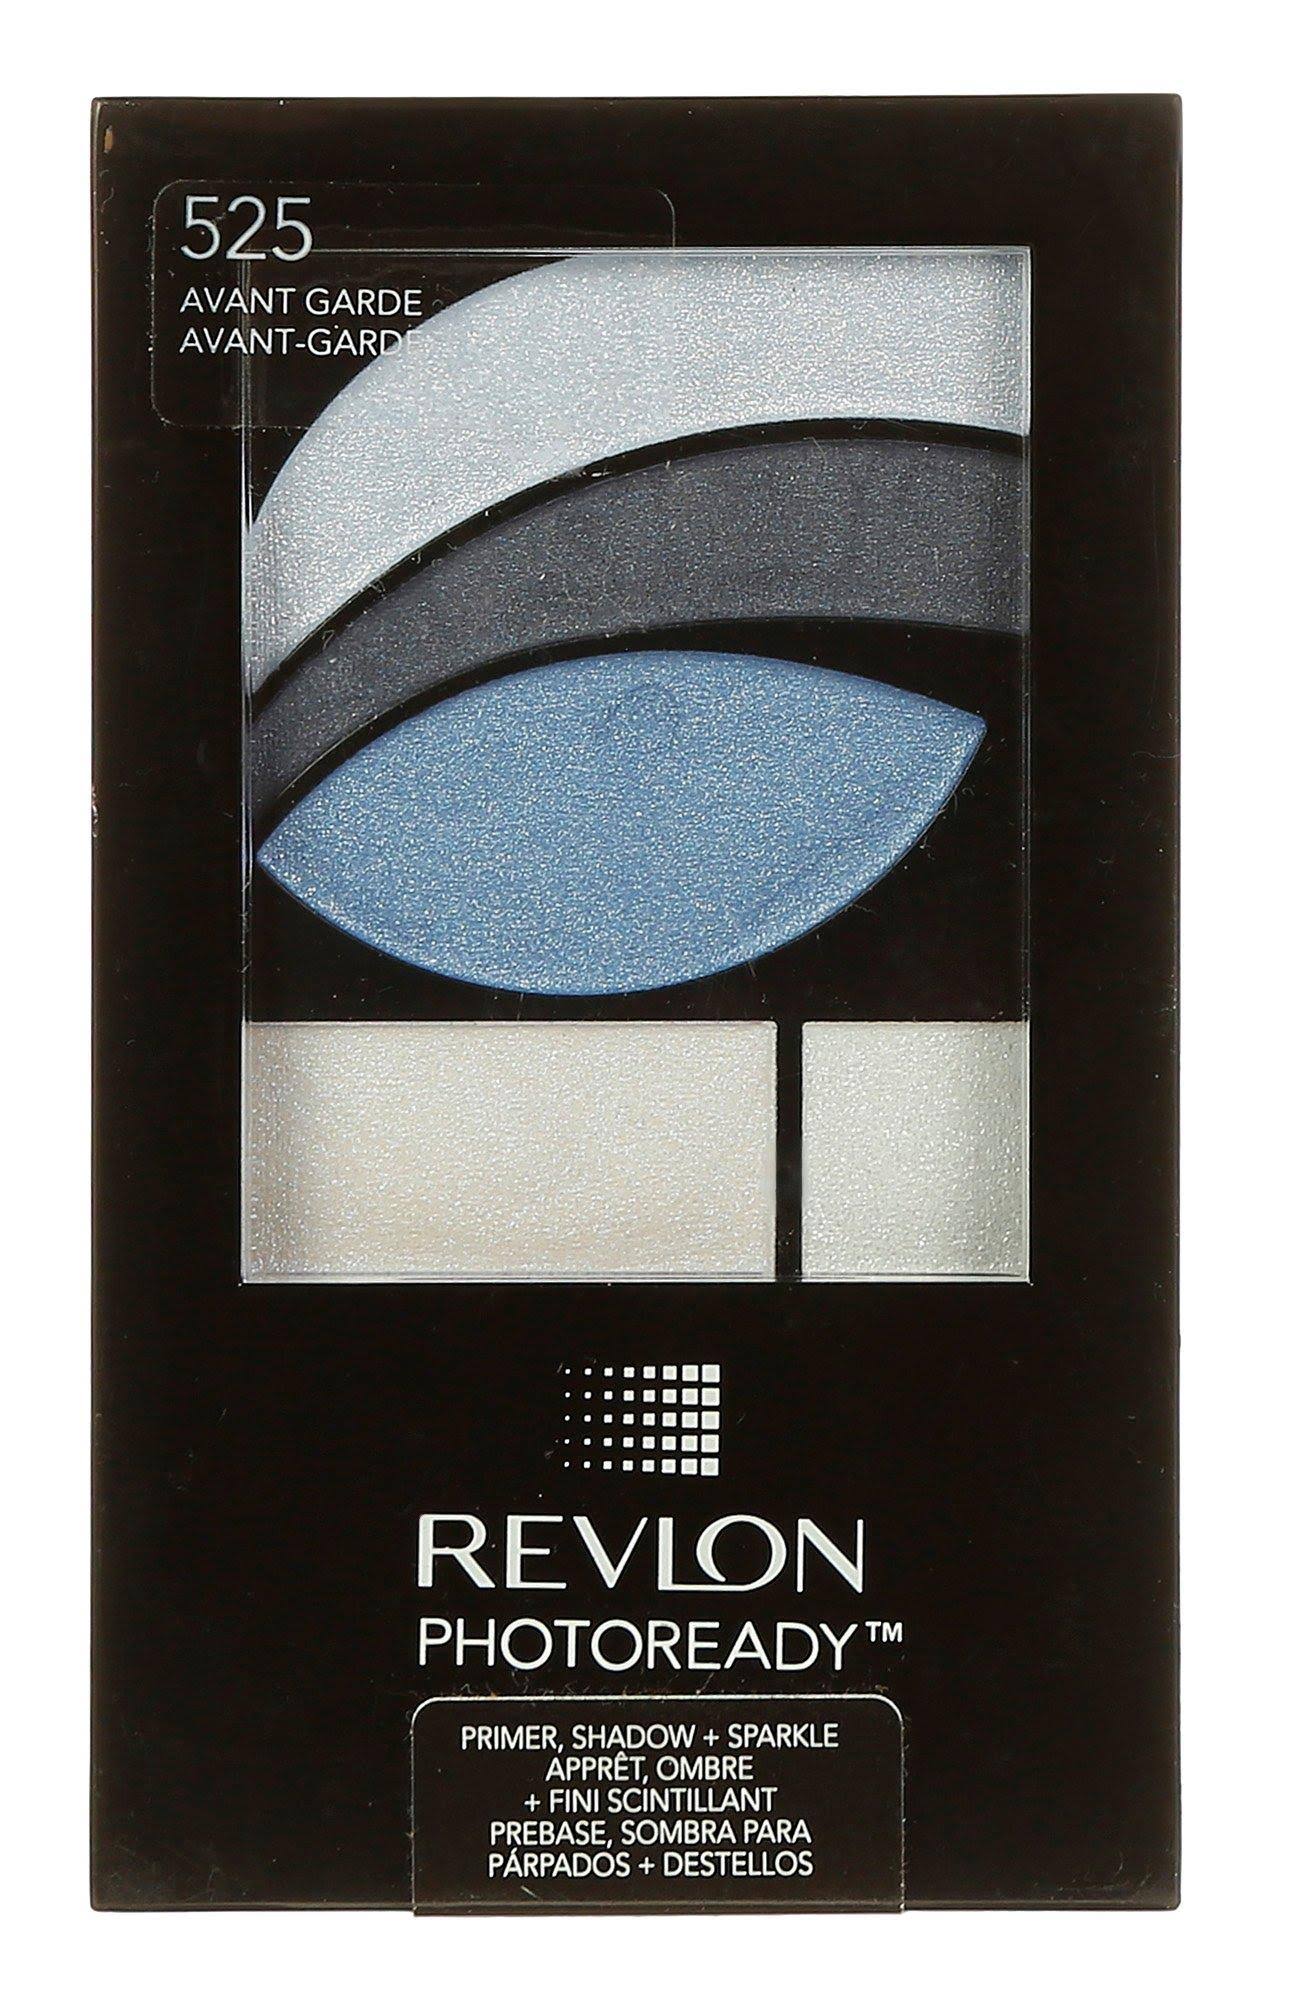 Revlon Photo Ready 525 Avant Garde Eye Shadow - 0.1oz